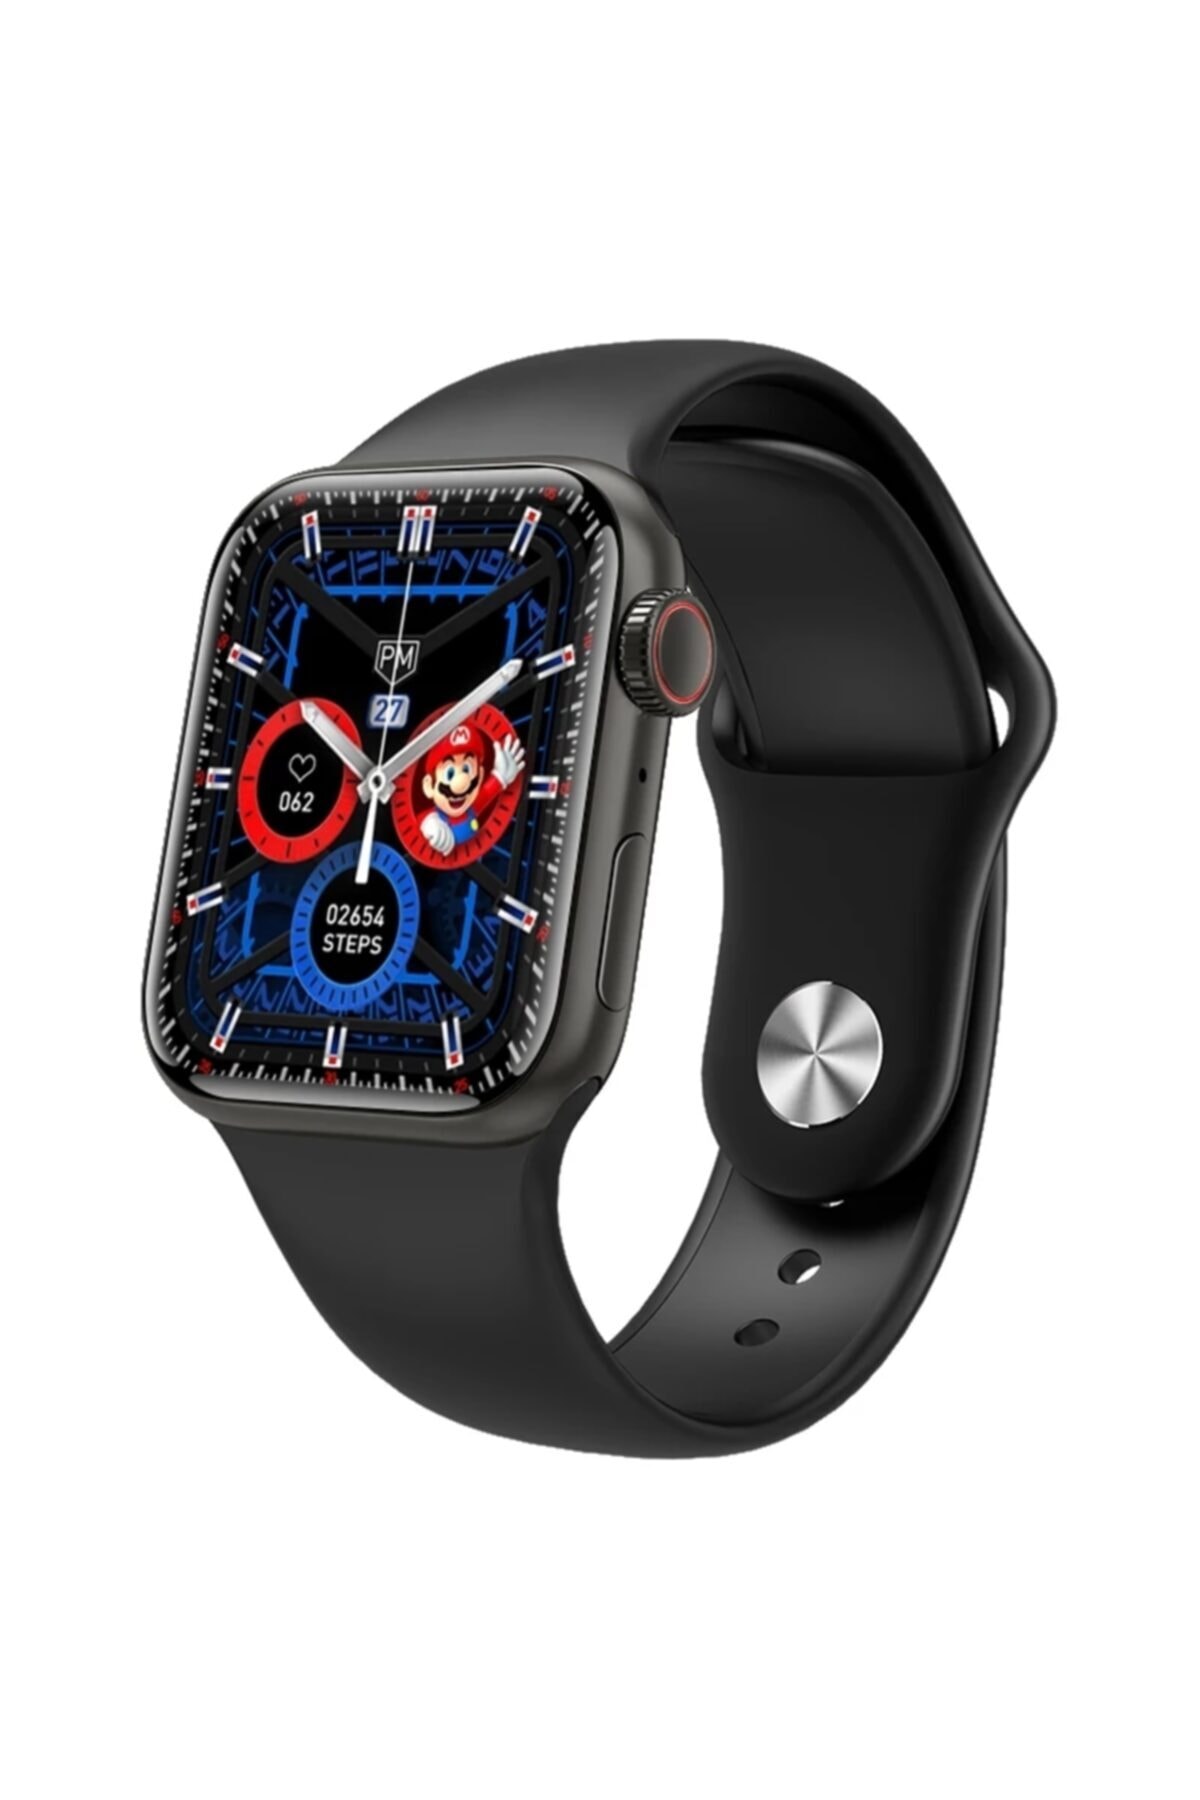 shoptekno Watch 7 Premium Akıllı Saat Siyah Smartwatch Tam Ekran Dokunmatik Ios Ve Android Uyumlu